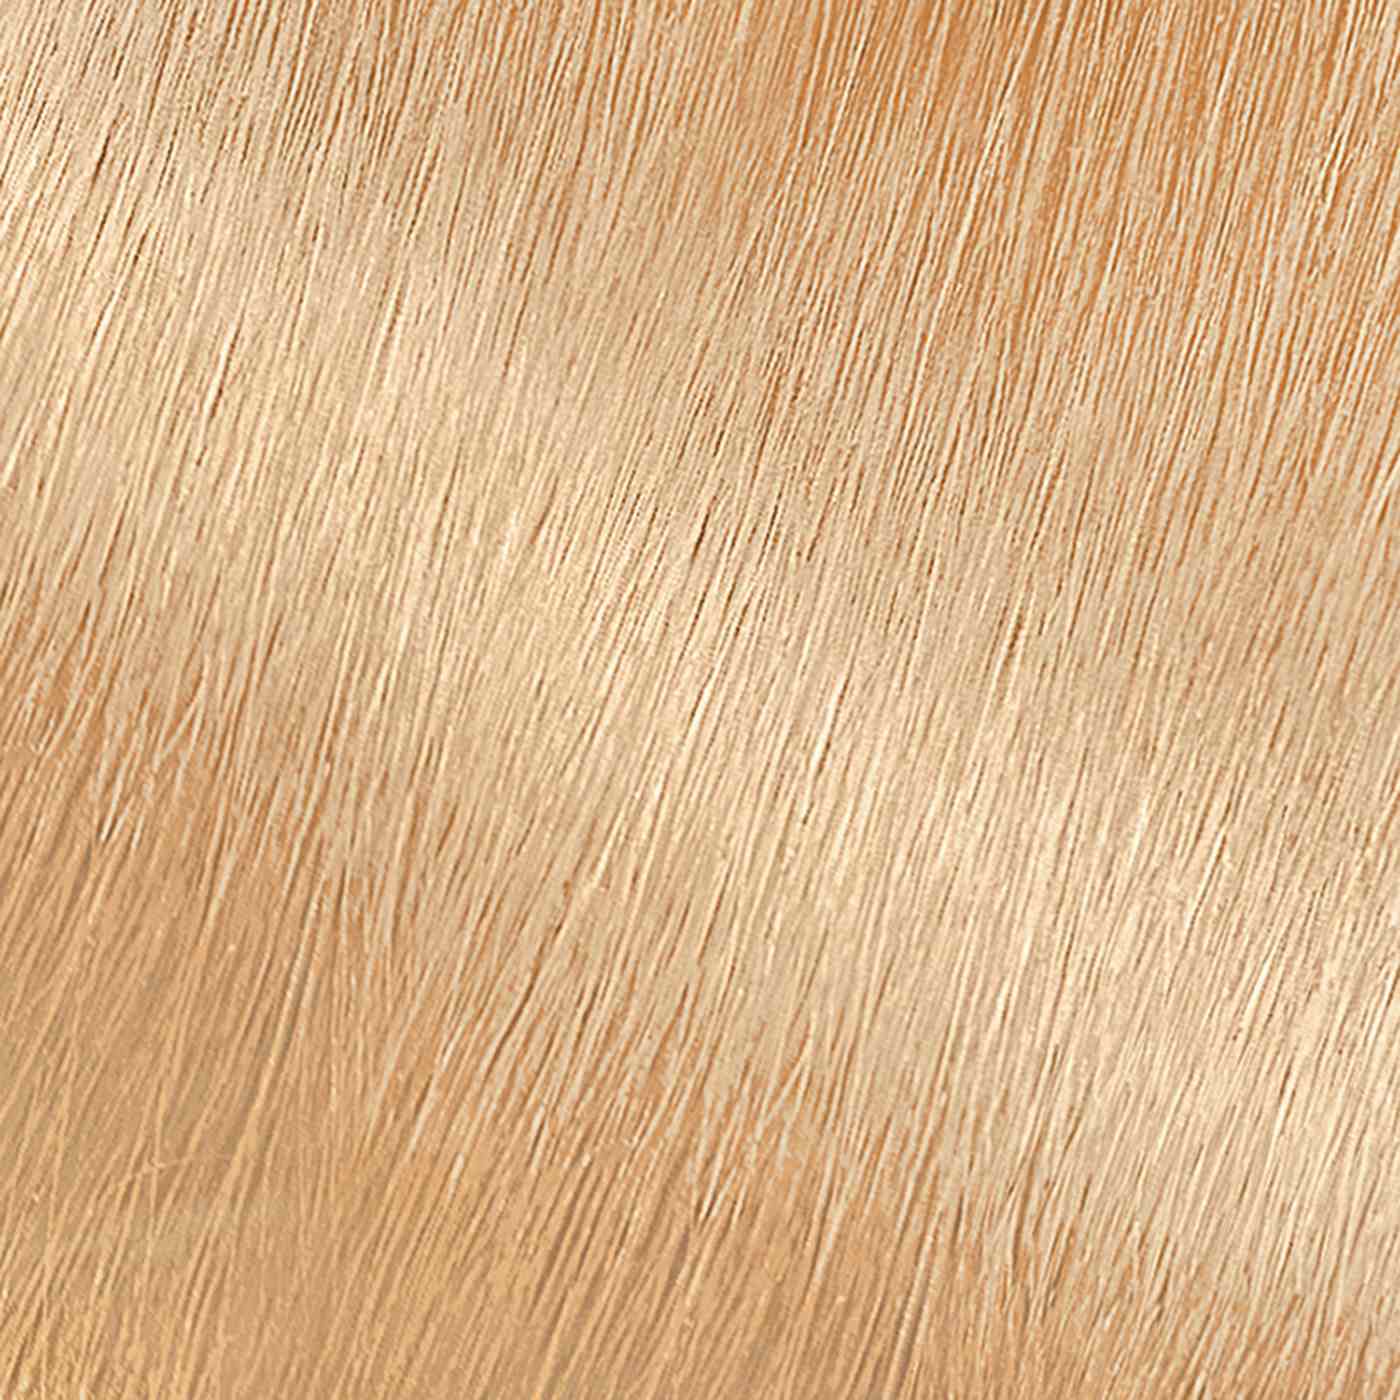 Garnier Nutrisse Nourishing Hair Color Creme - 100 Extra-Light Natural Blonde (Chamomile); image 3 of 16